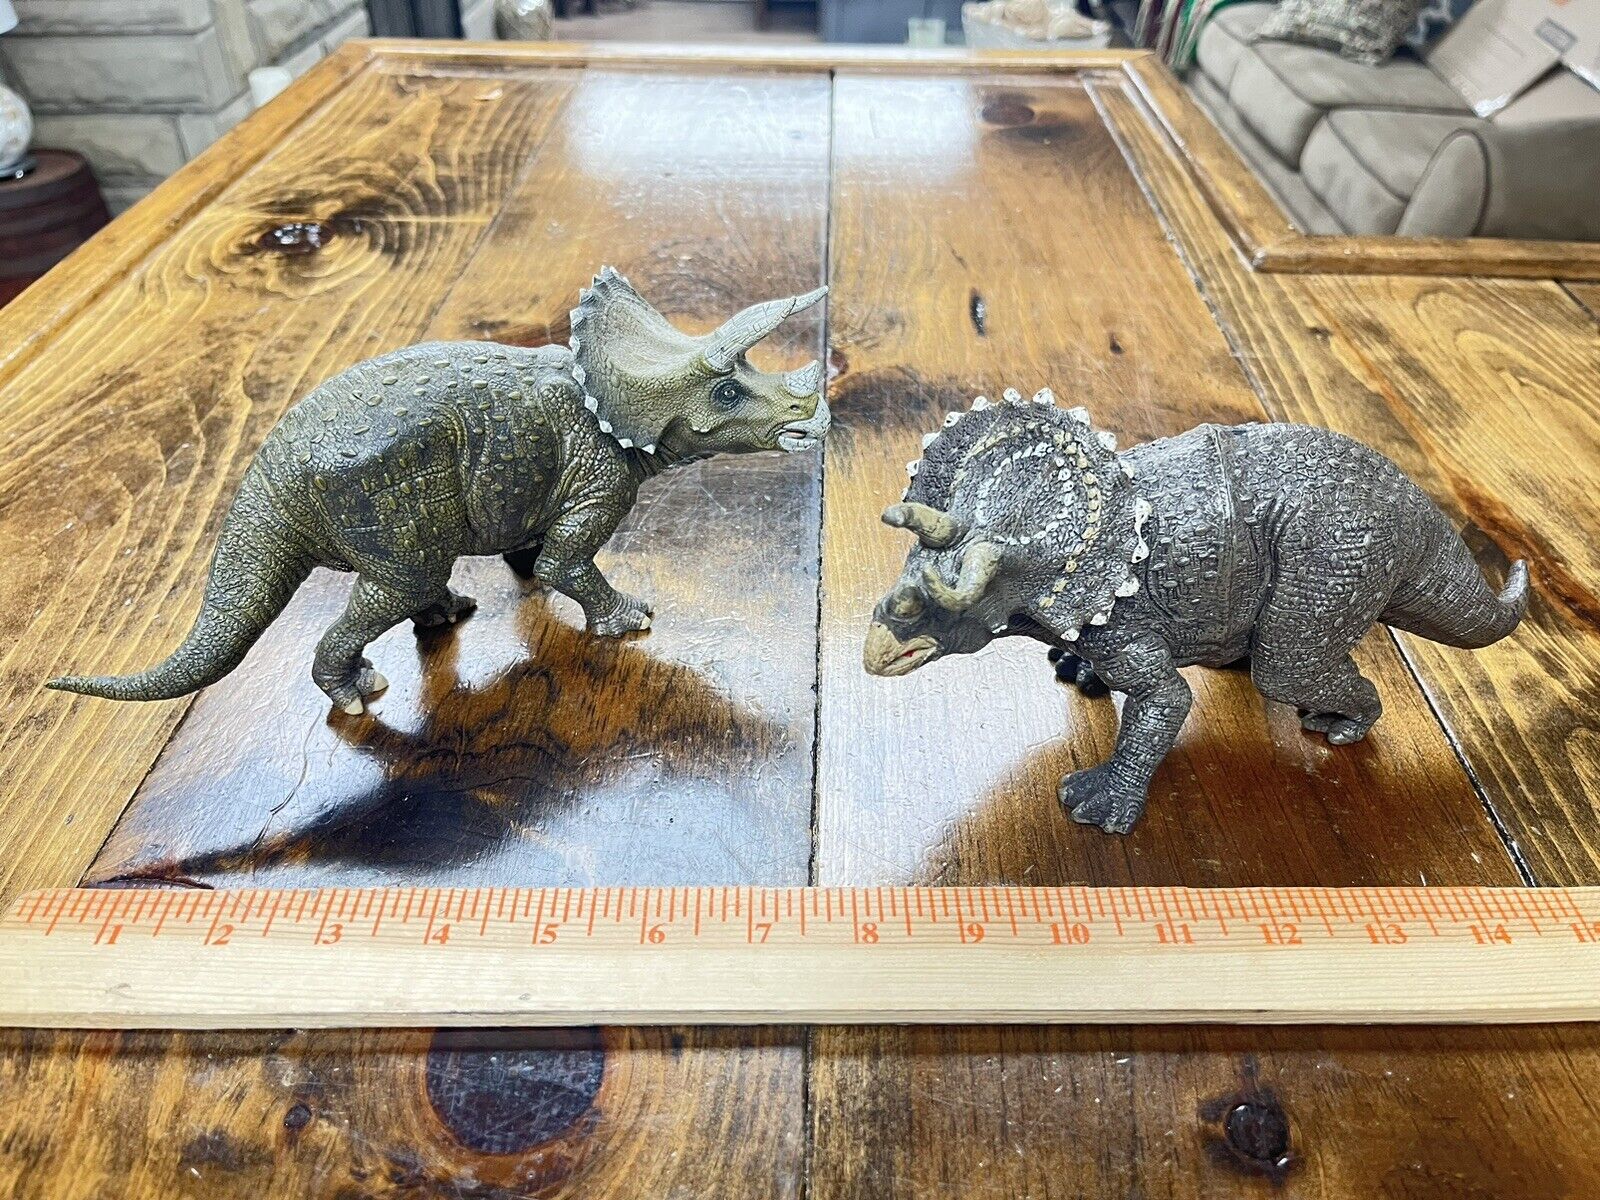 Papo classic Triceratops dinosaur model with amazing reverse image look-alike.